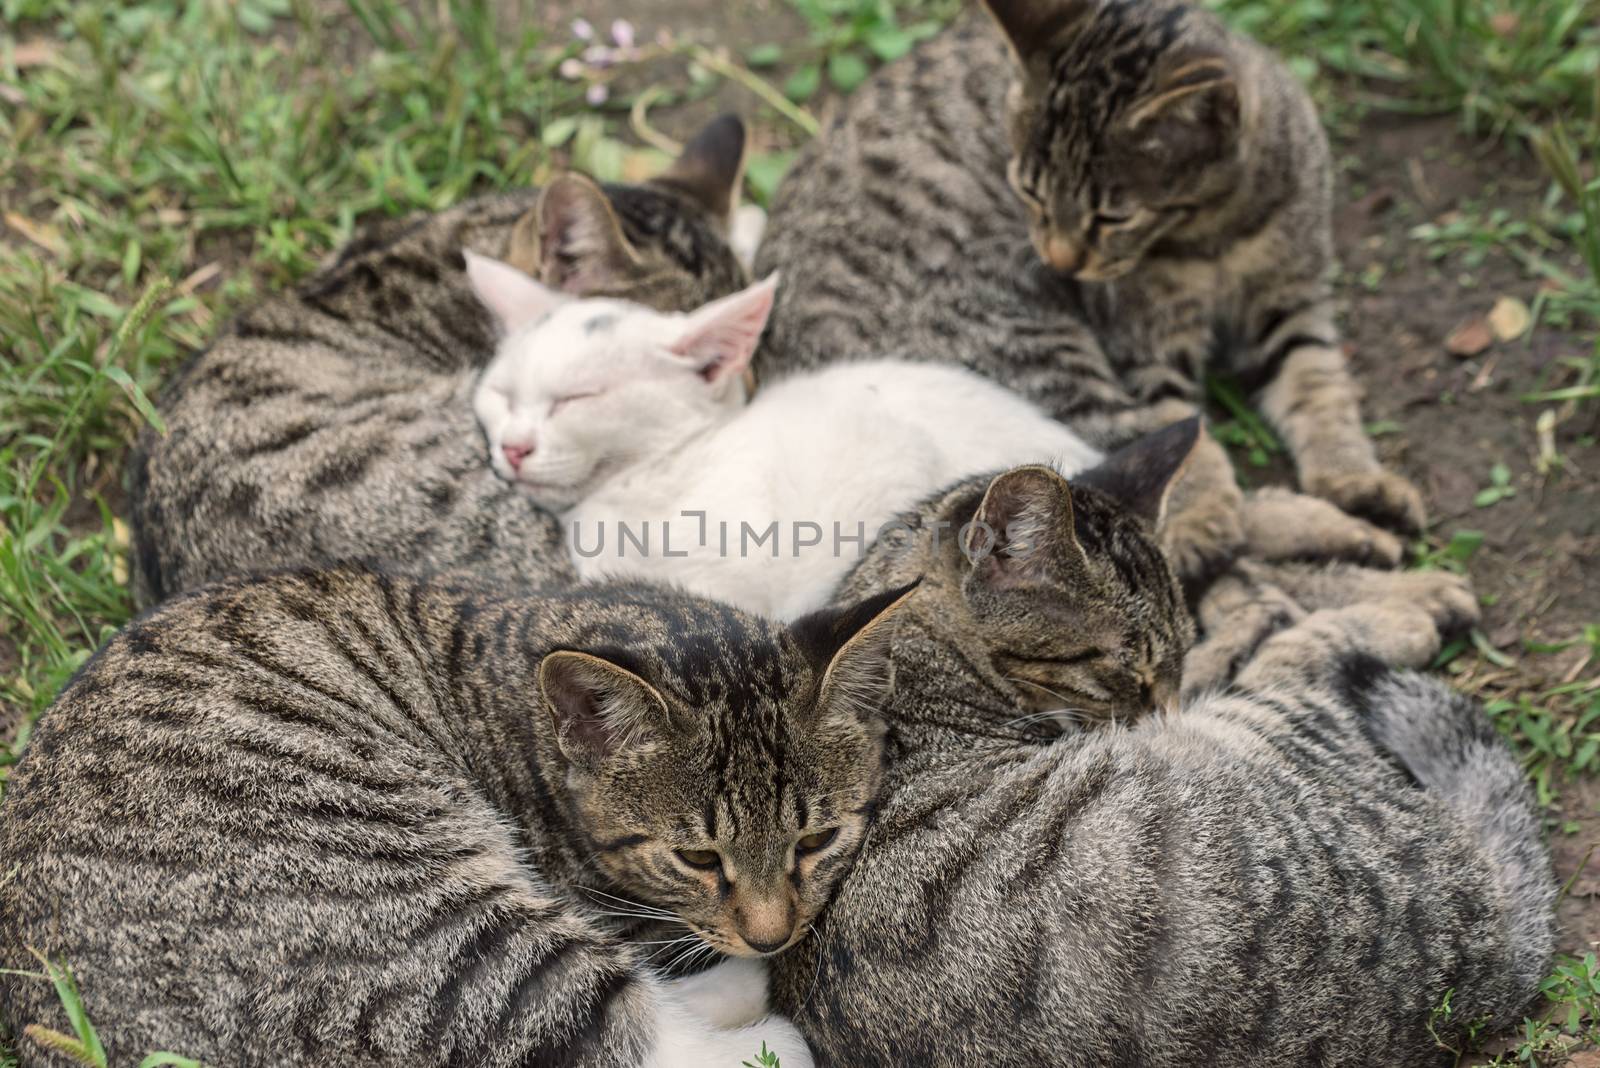 Homeless cats sleep. Several cats sleep together